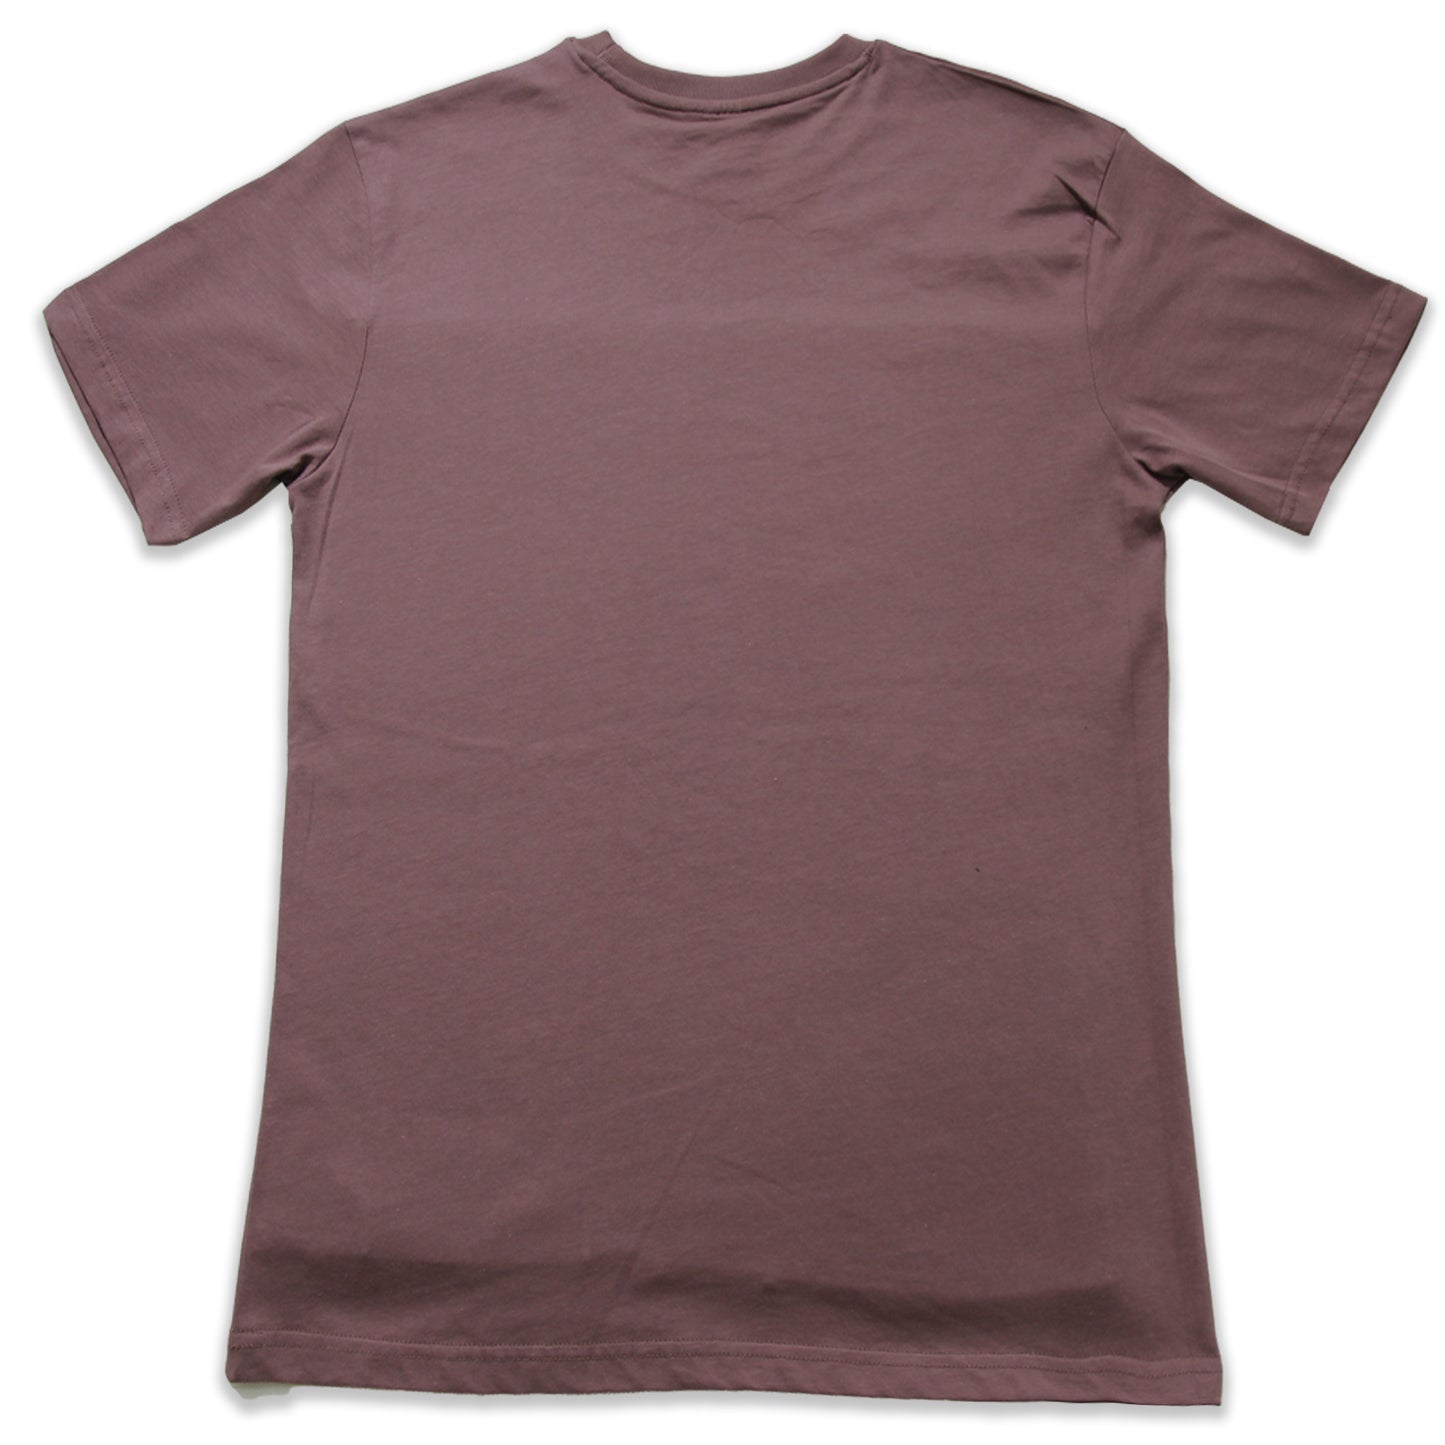 Men's Basic T shirts